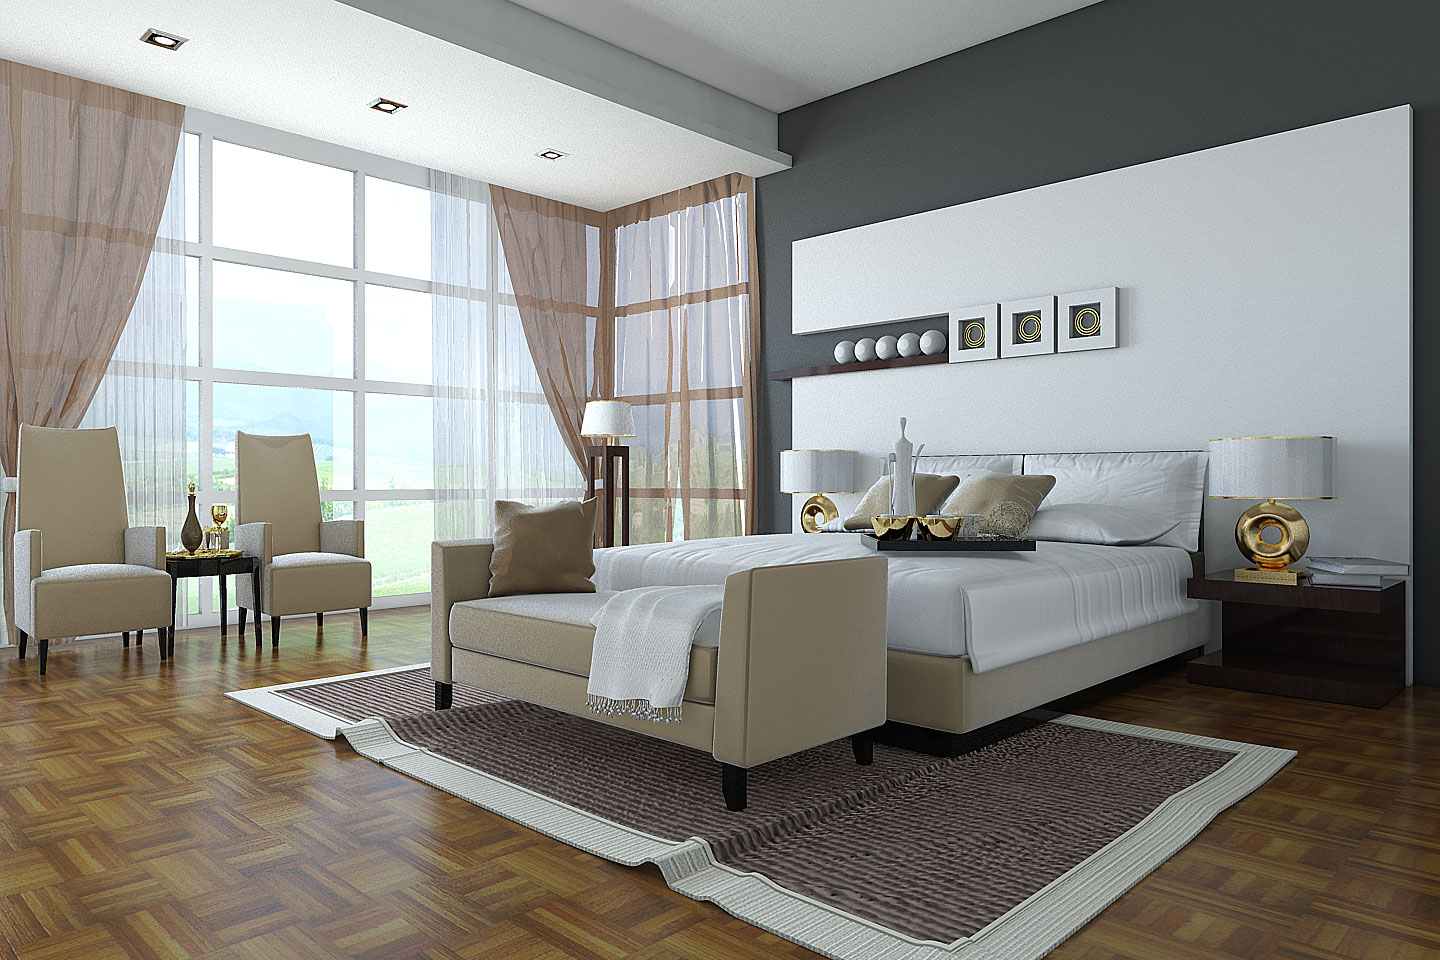 Interior Design Bedroom Ideas On A Budget